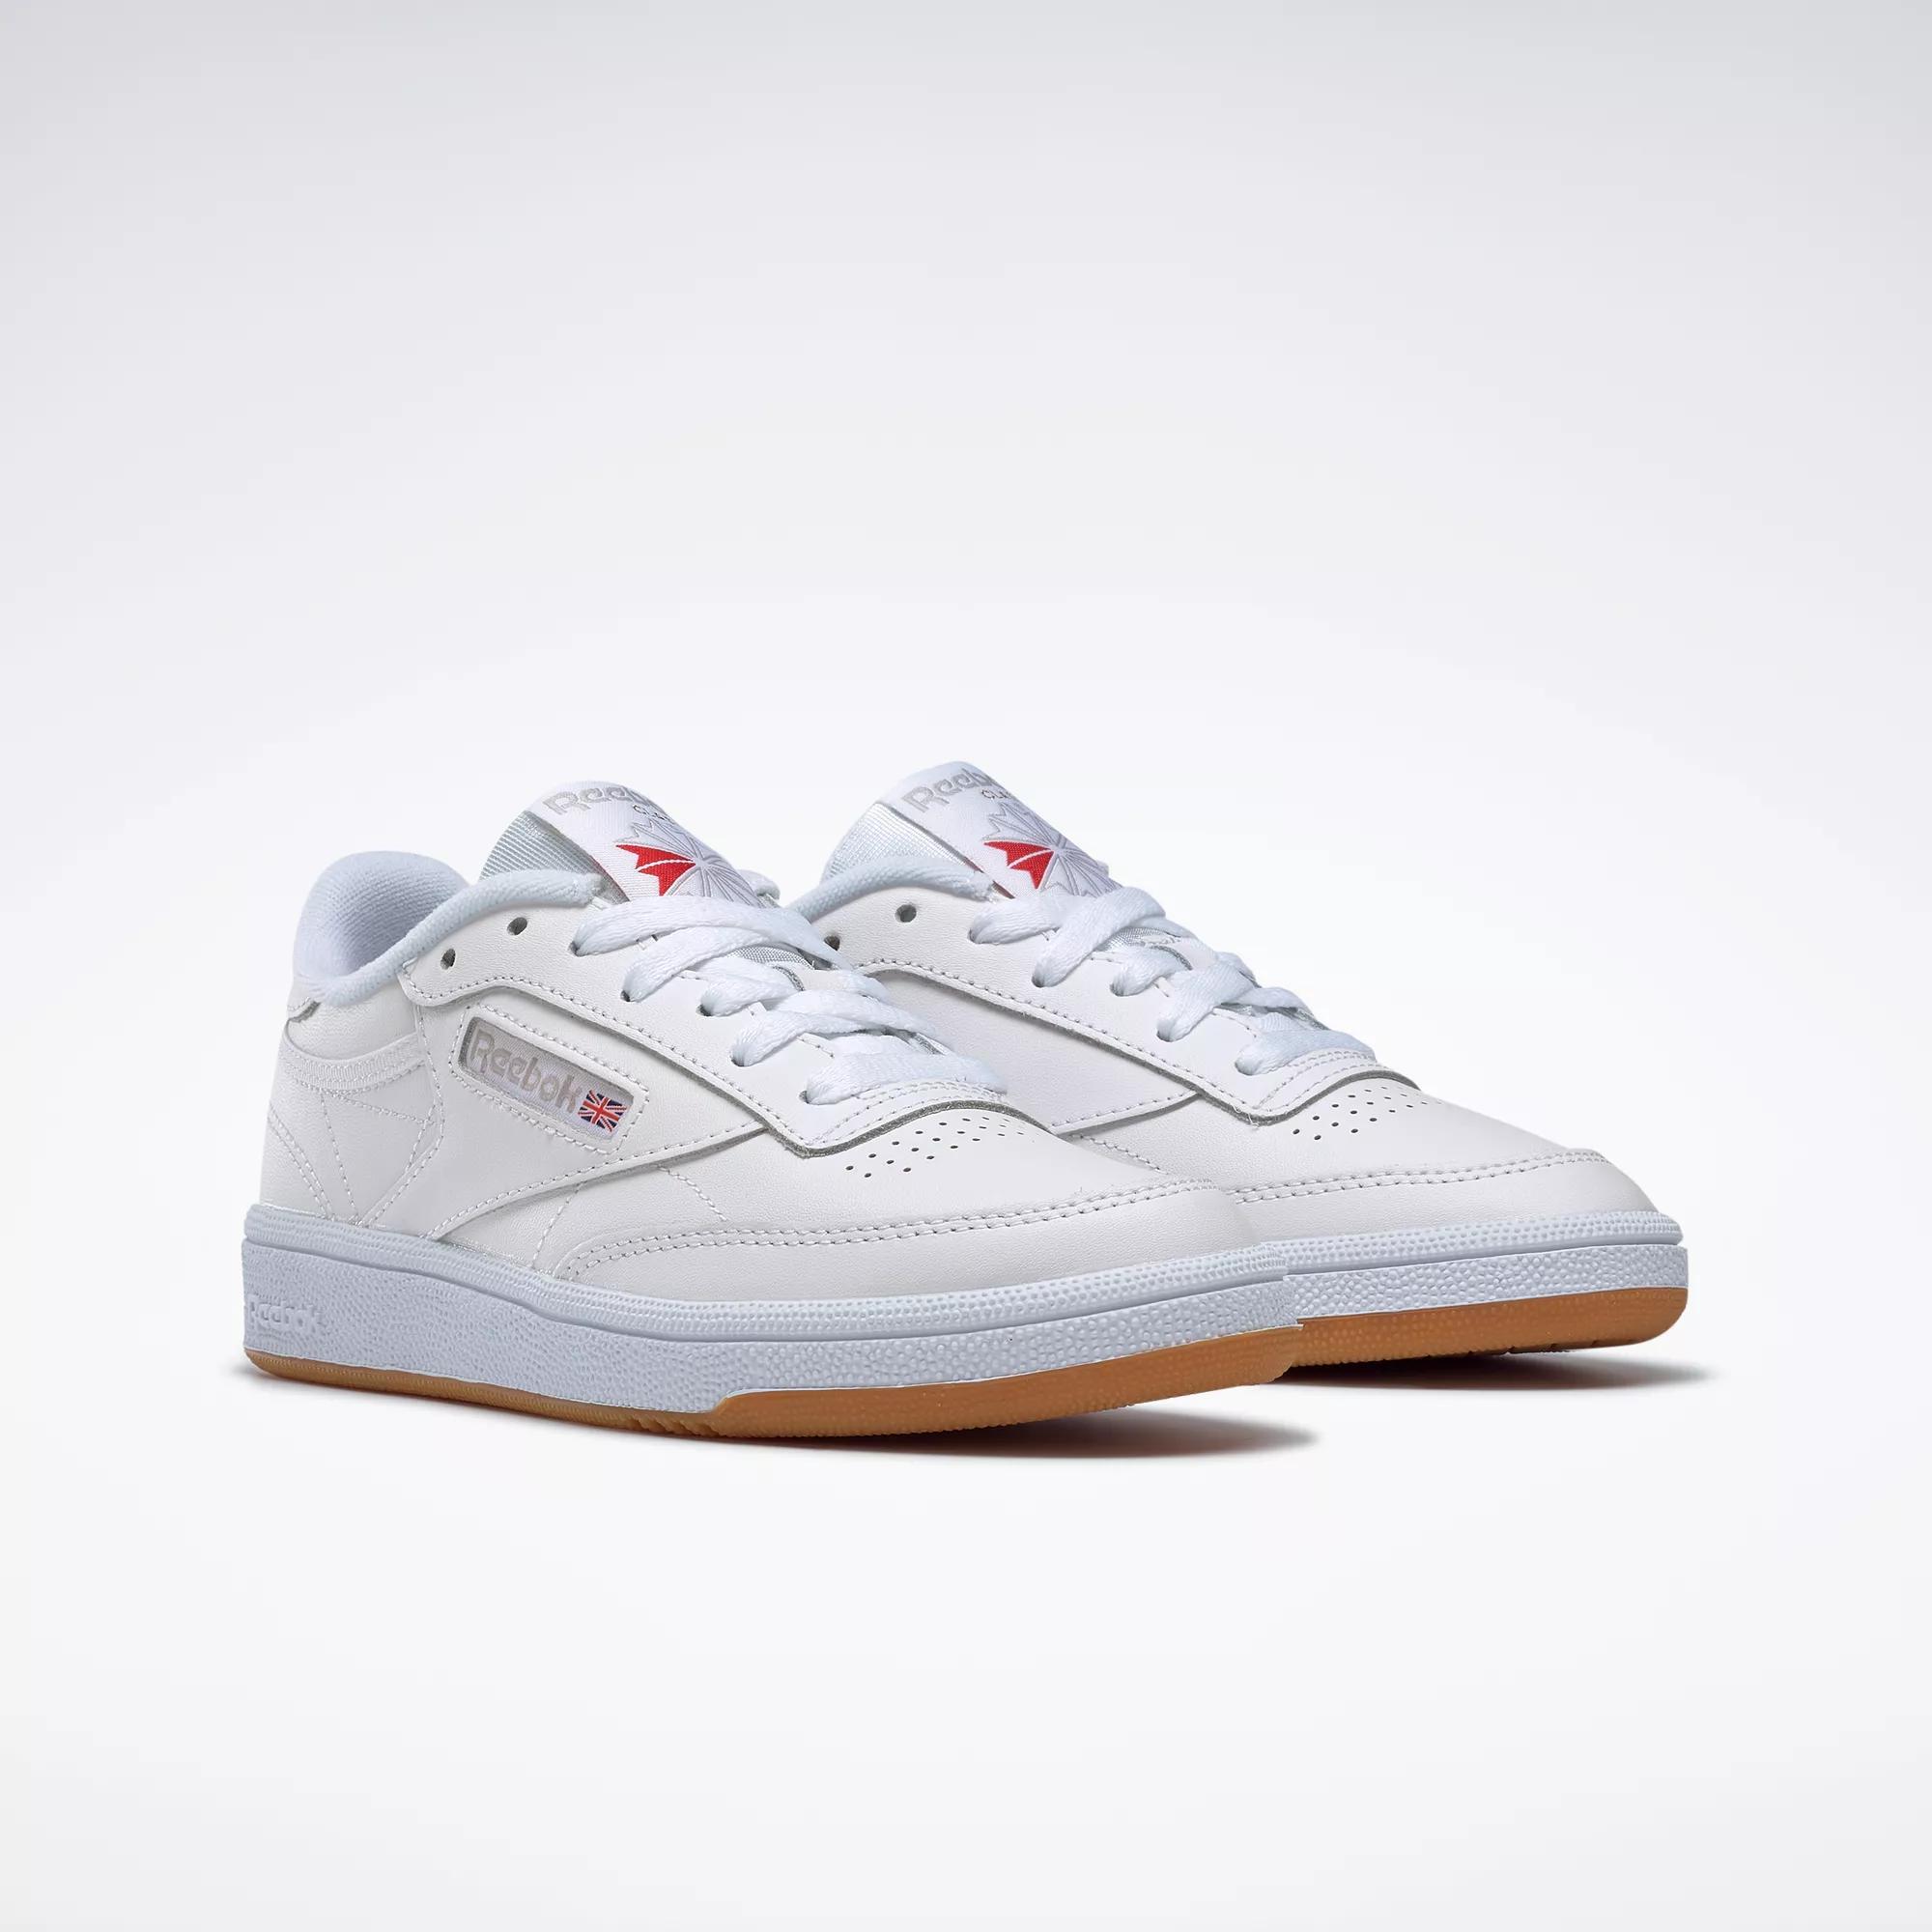 Club C 85 Shoes - White Light Grey / Gum